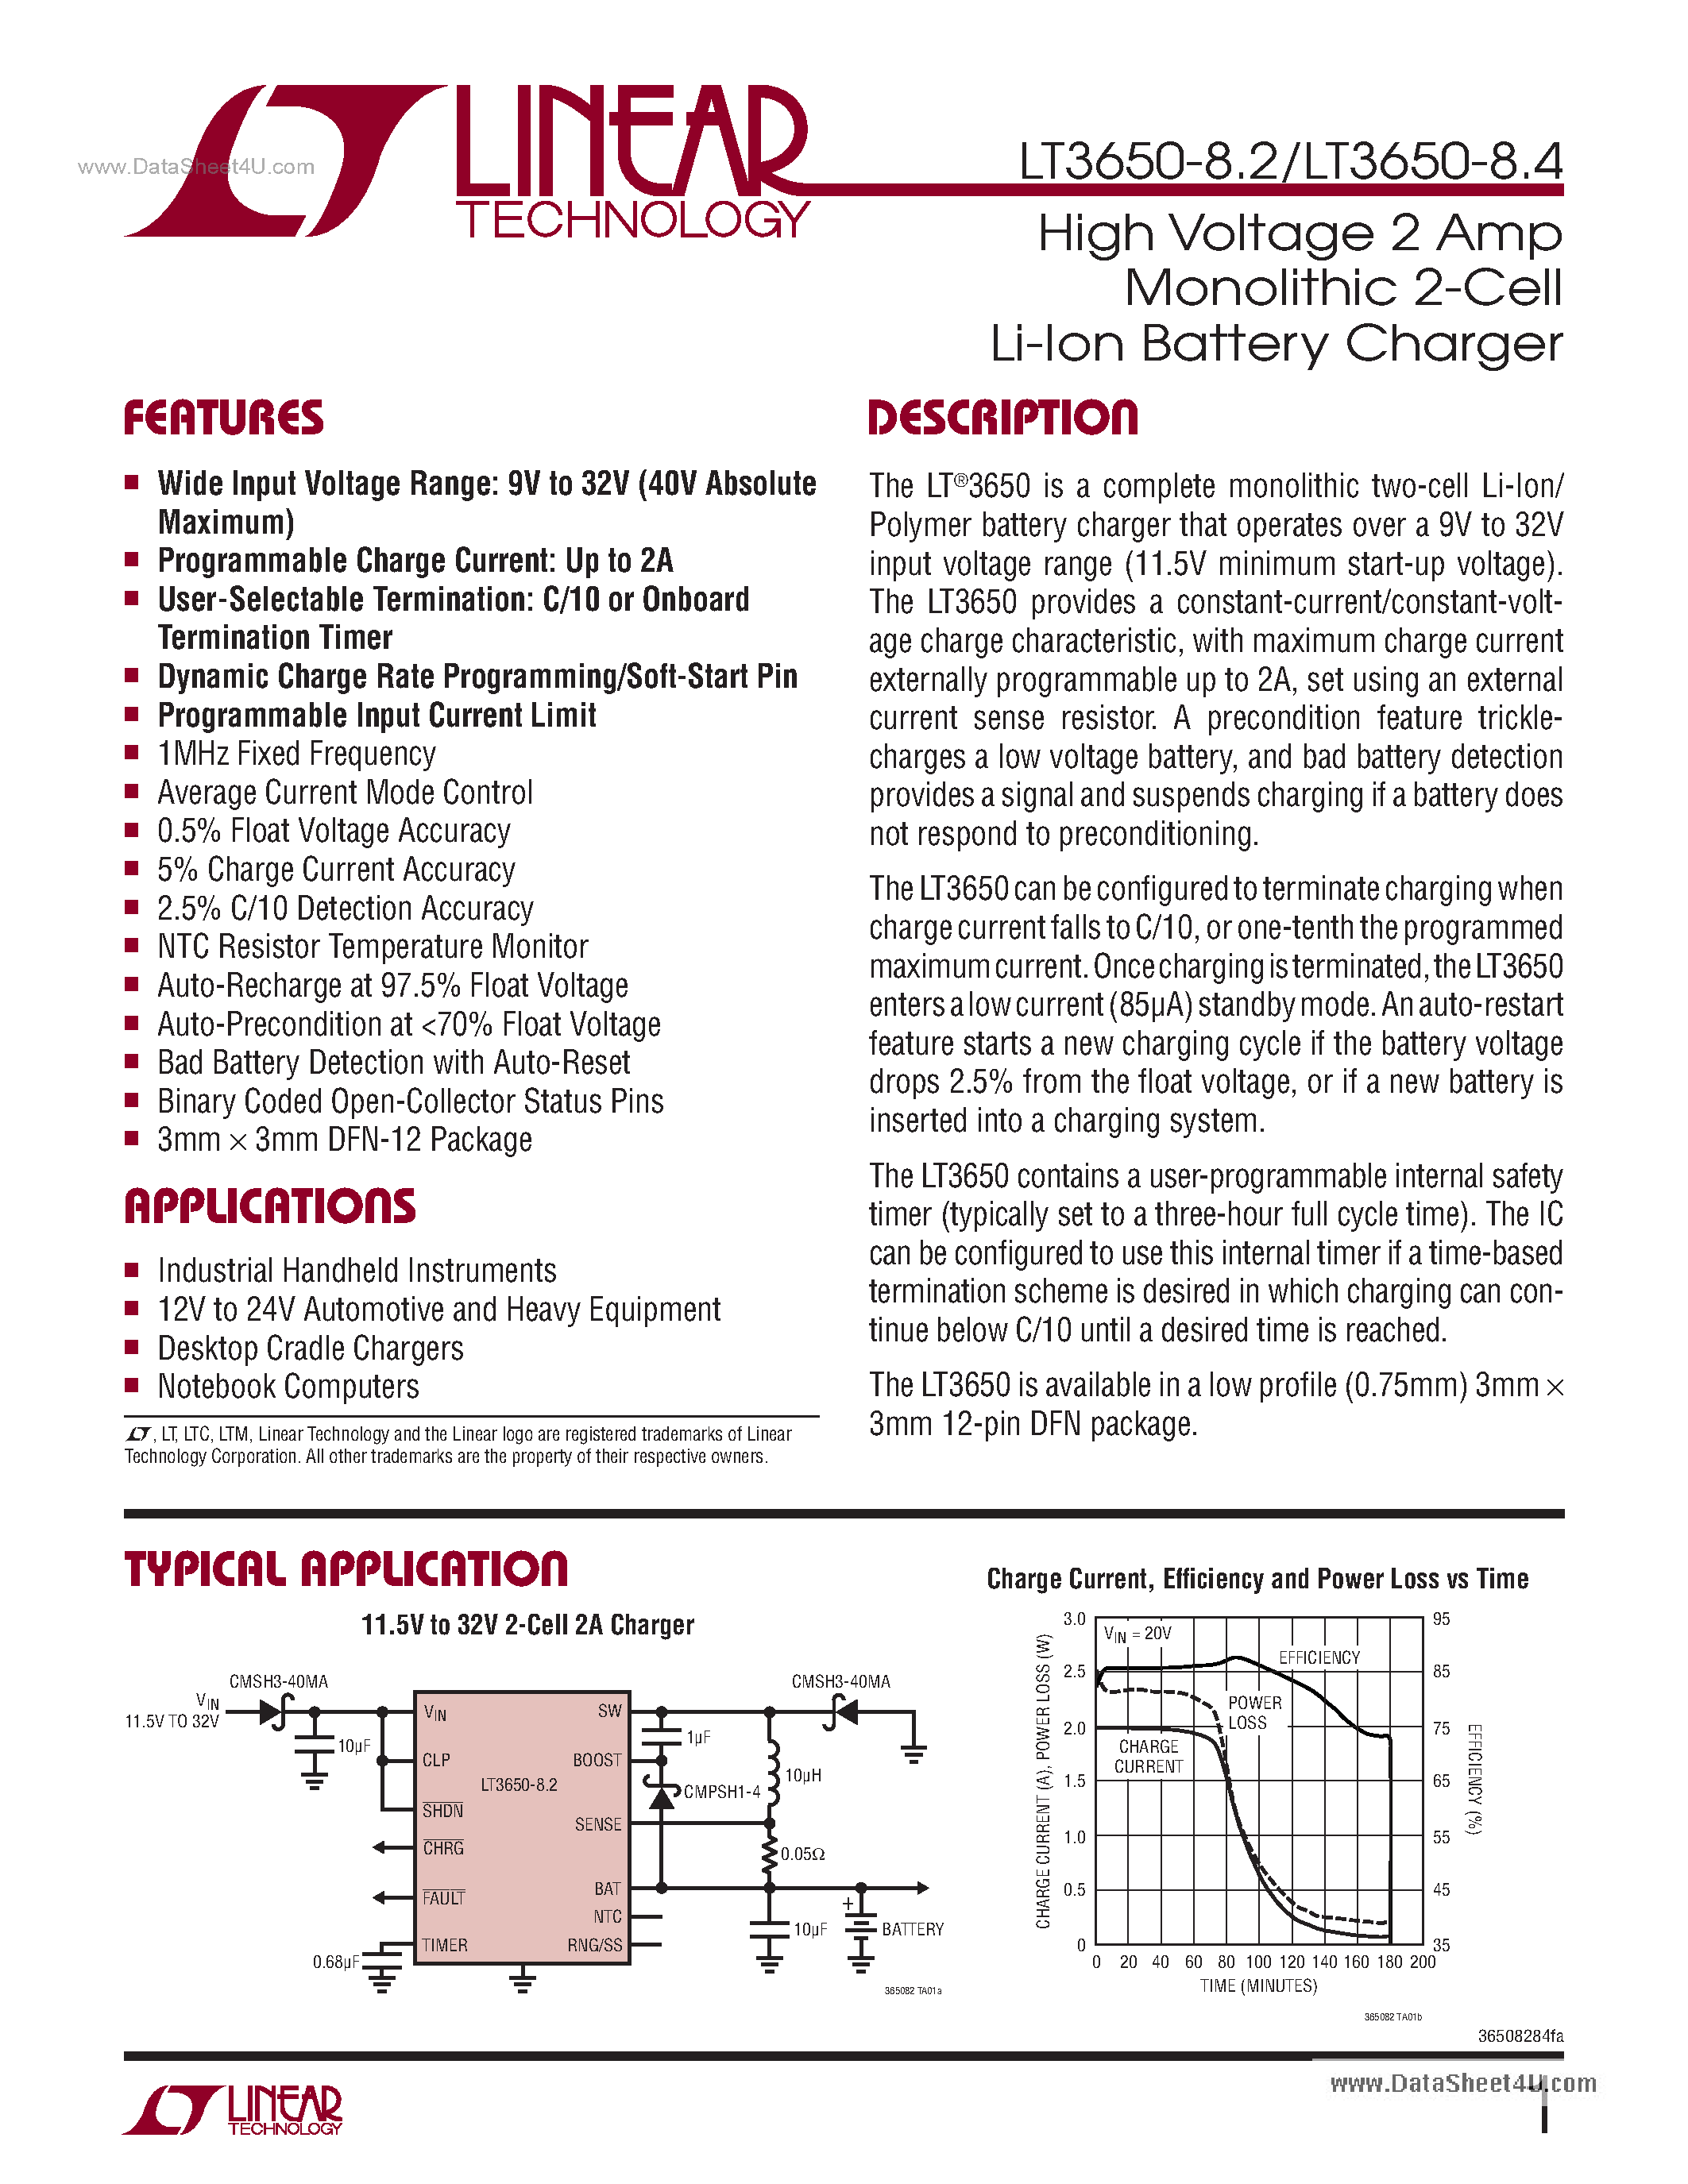 Даташит LT3650-8.2-(LT3650-8.2 / -8.4) High Voltage 2 Amp Monolithic Li-Ion Battery Charger страница 1